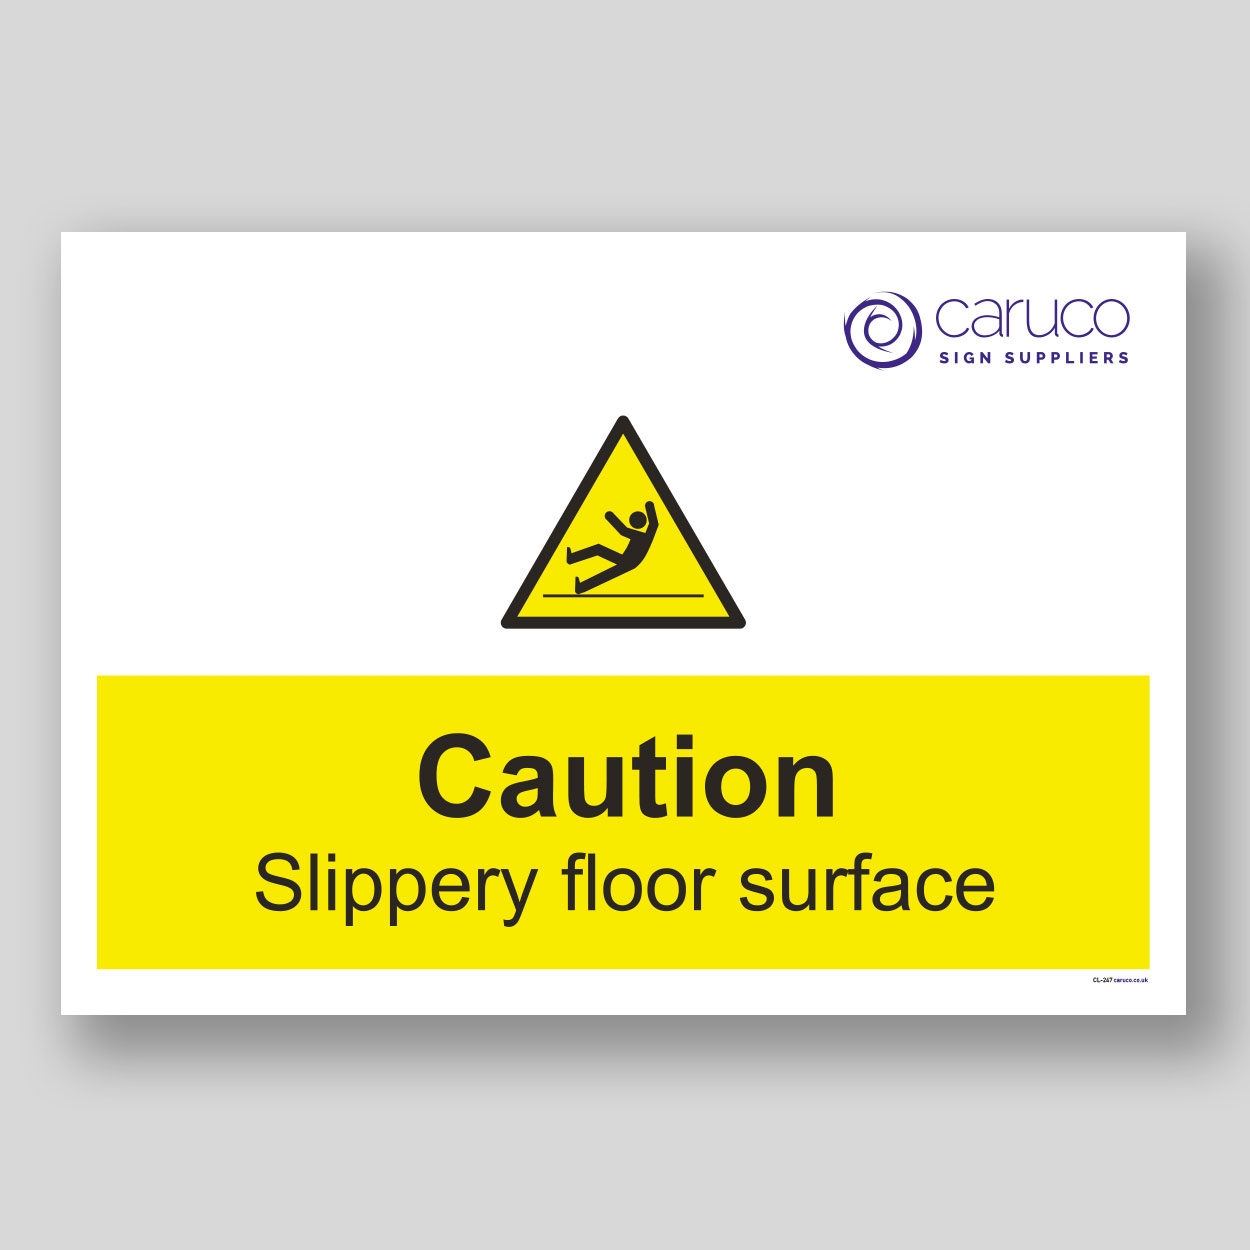 CL-247 Caution - slippery floor